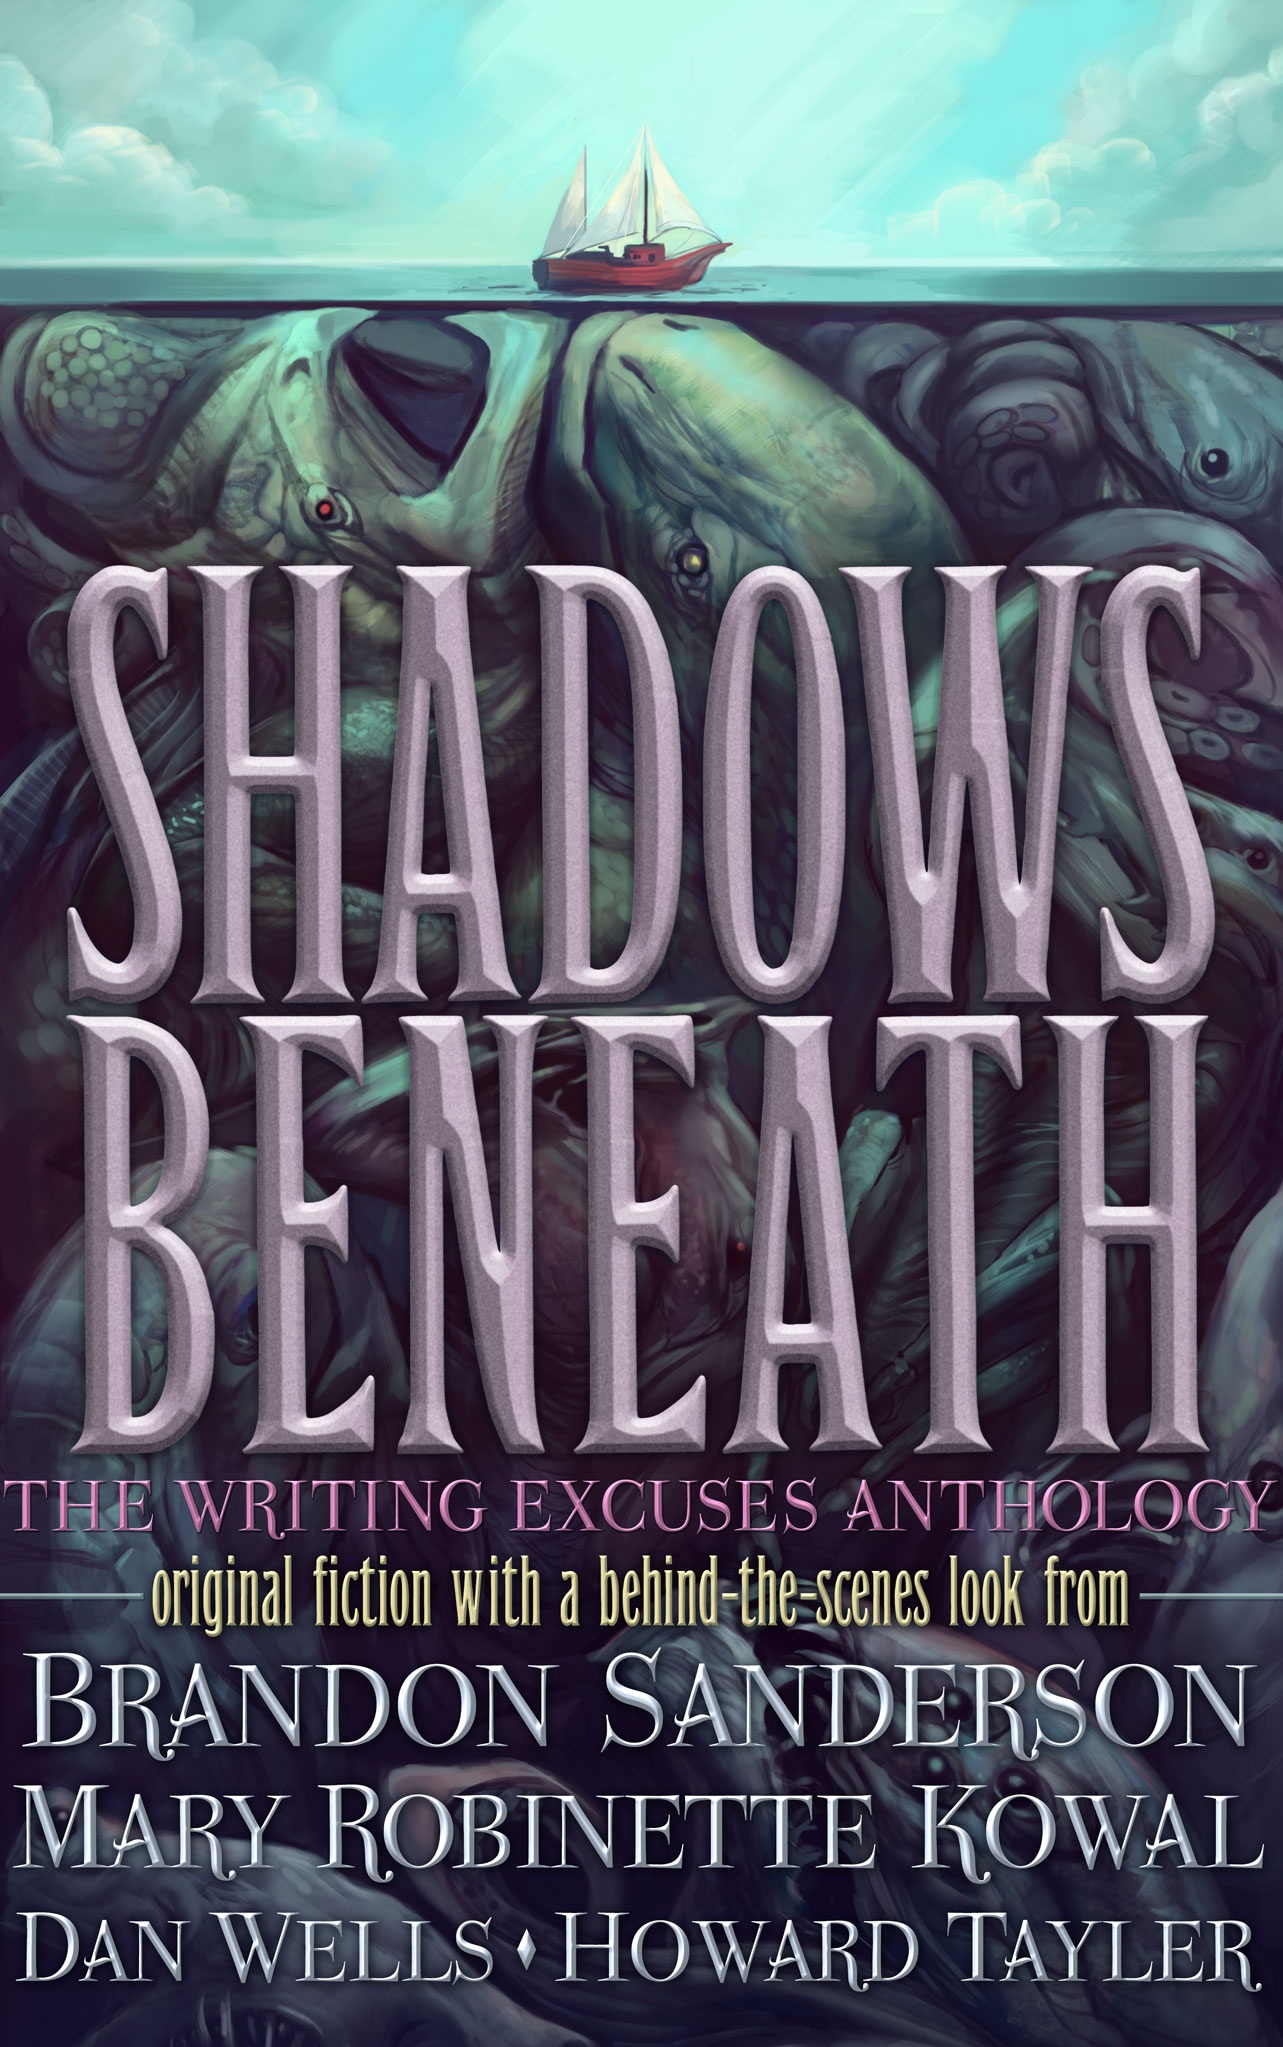 Brandon Sanderson, Mary Robinette Kowal, Dan Wells, Howard Tayler: Shadows Beneath: The Writing Excuses Anthology